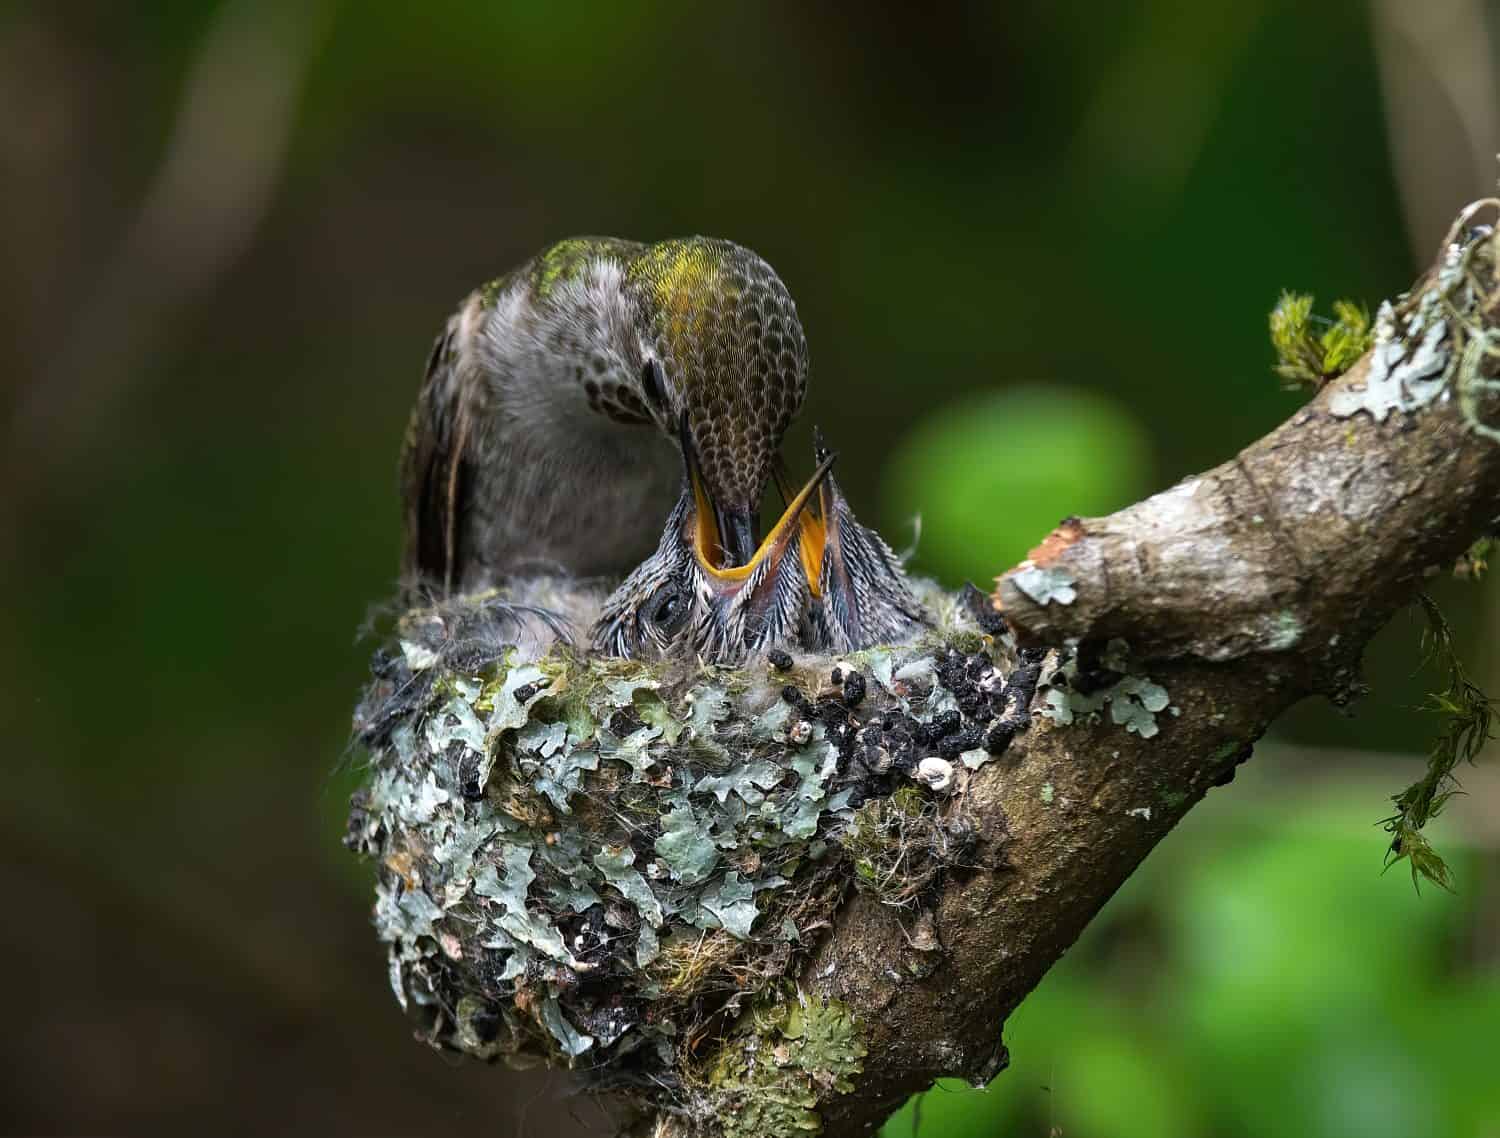 Female hummingbird feeding baby in the nest